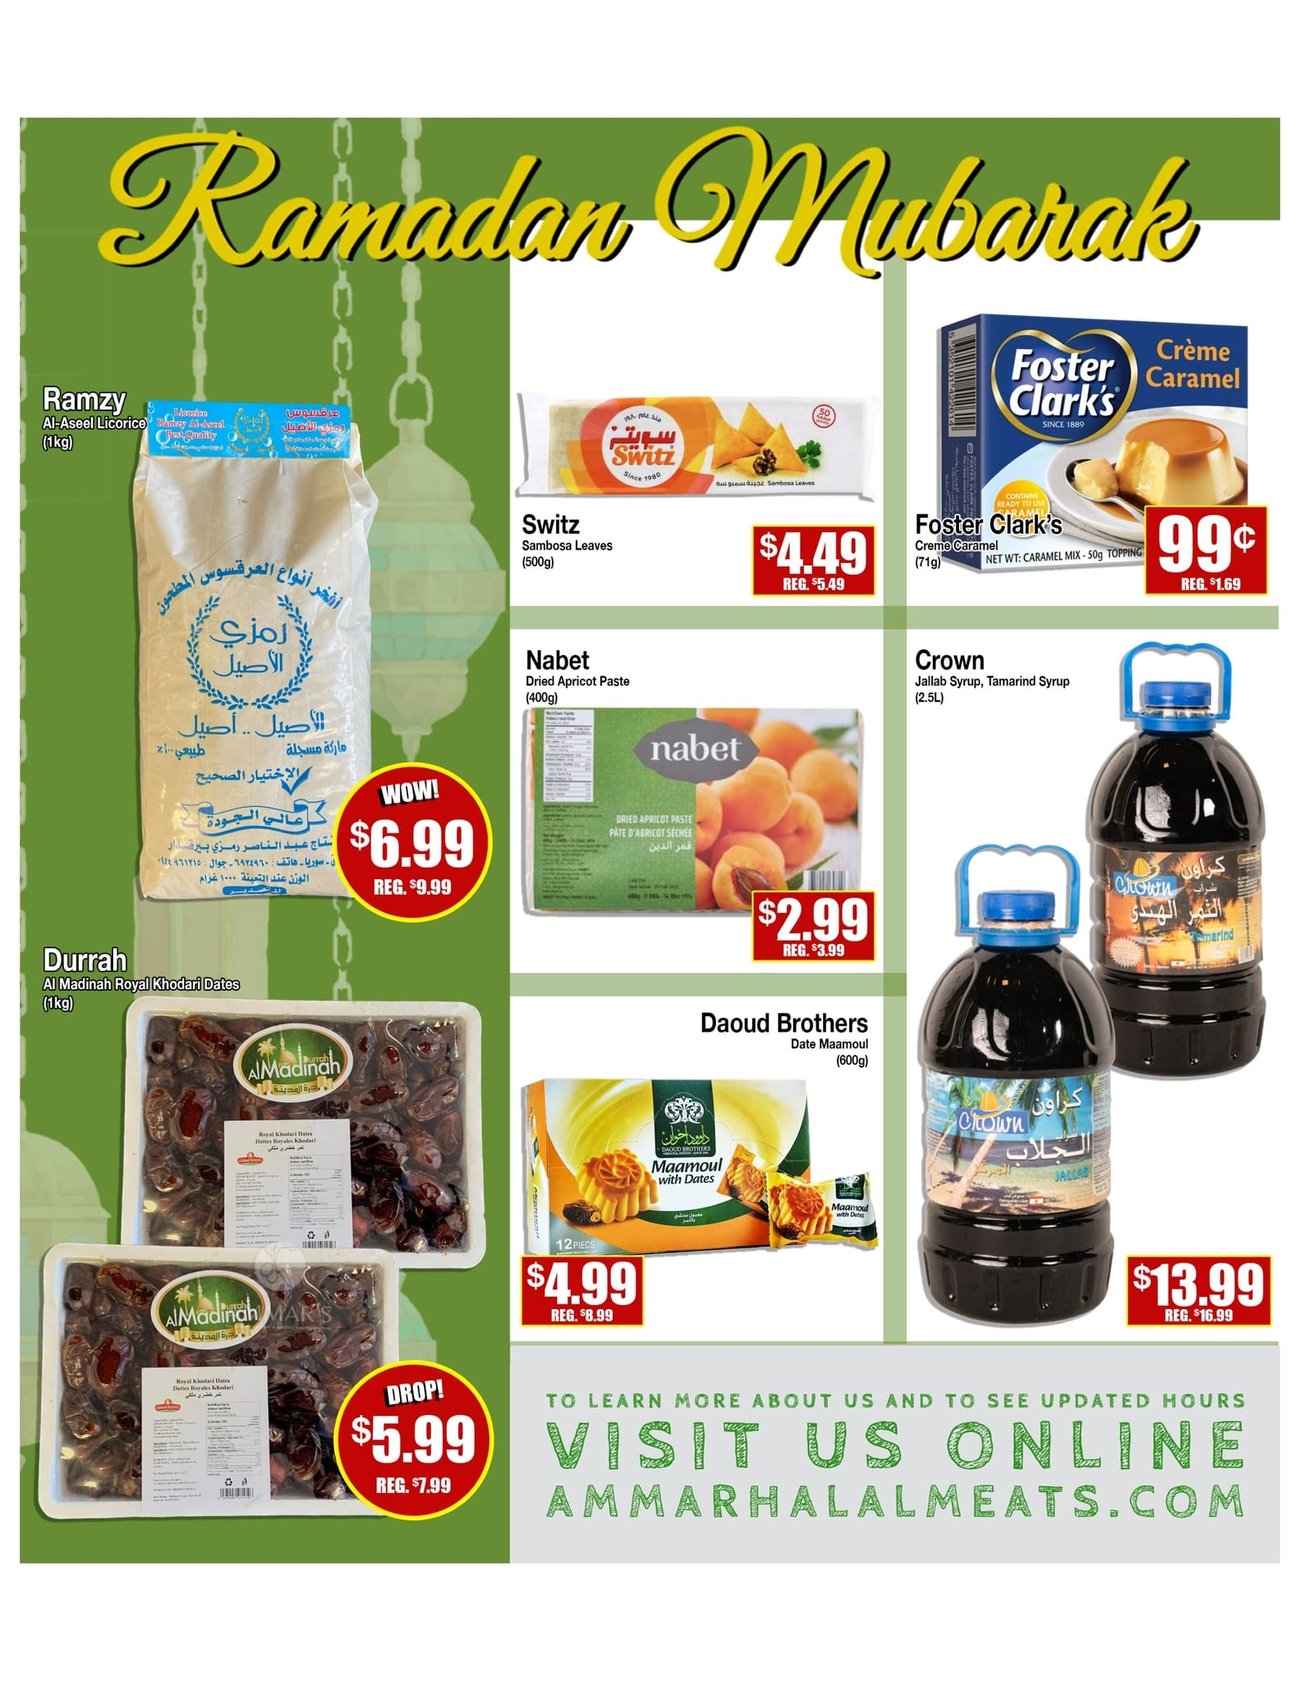 Ammar's - Weekly Flyer Specials - Page 5